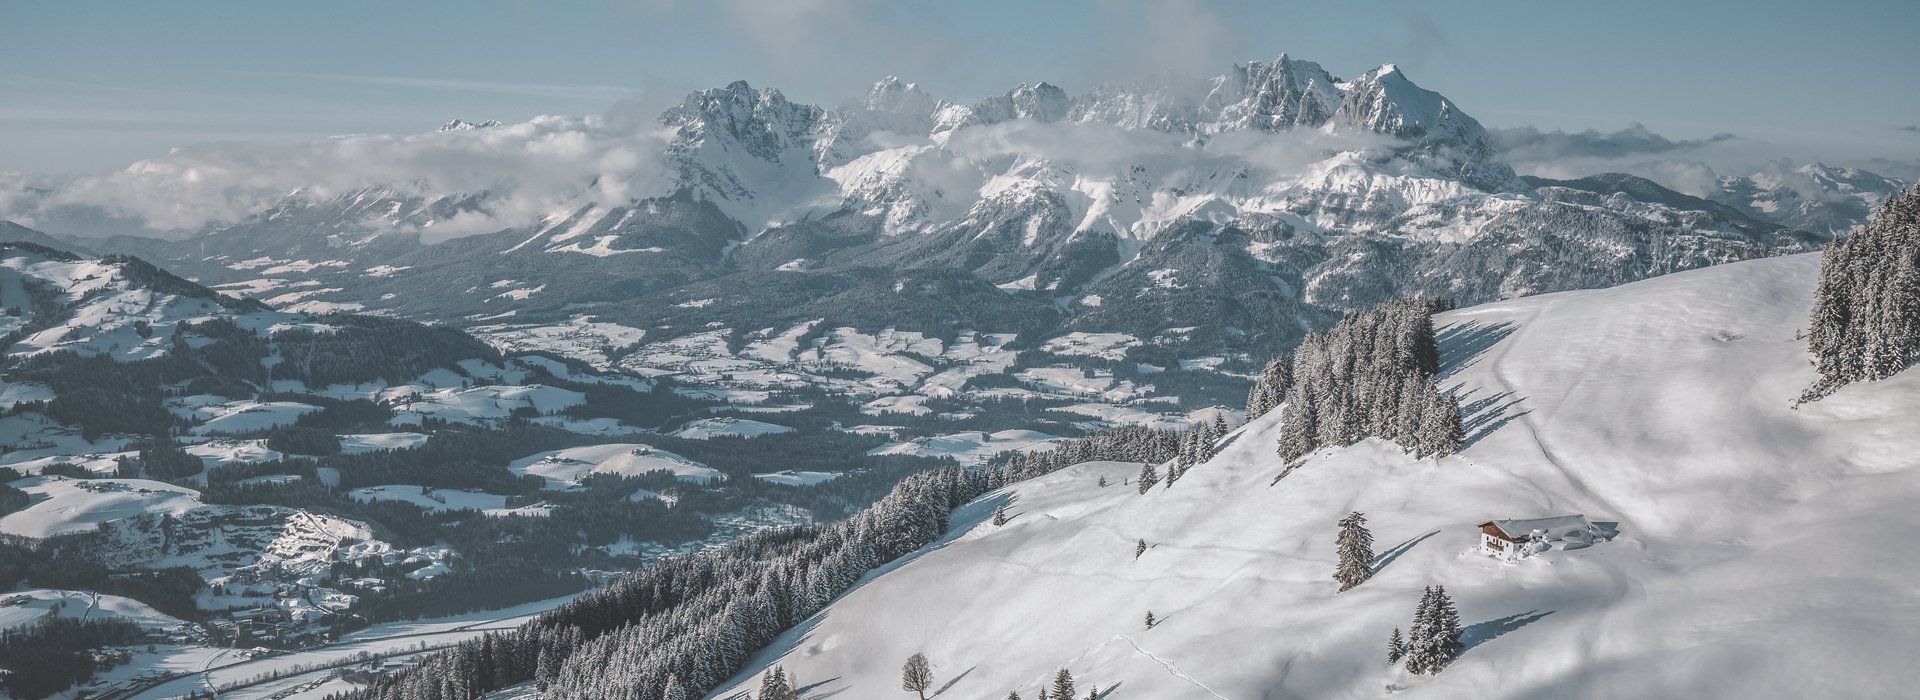 Panorama Landscape Ski Area Kitzbühel